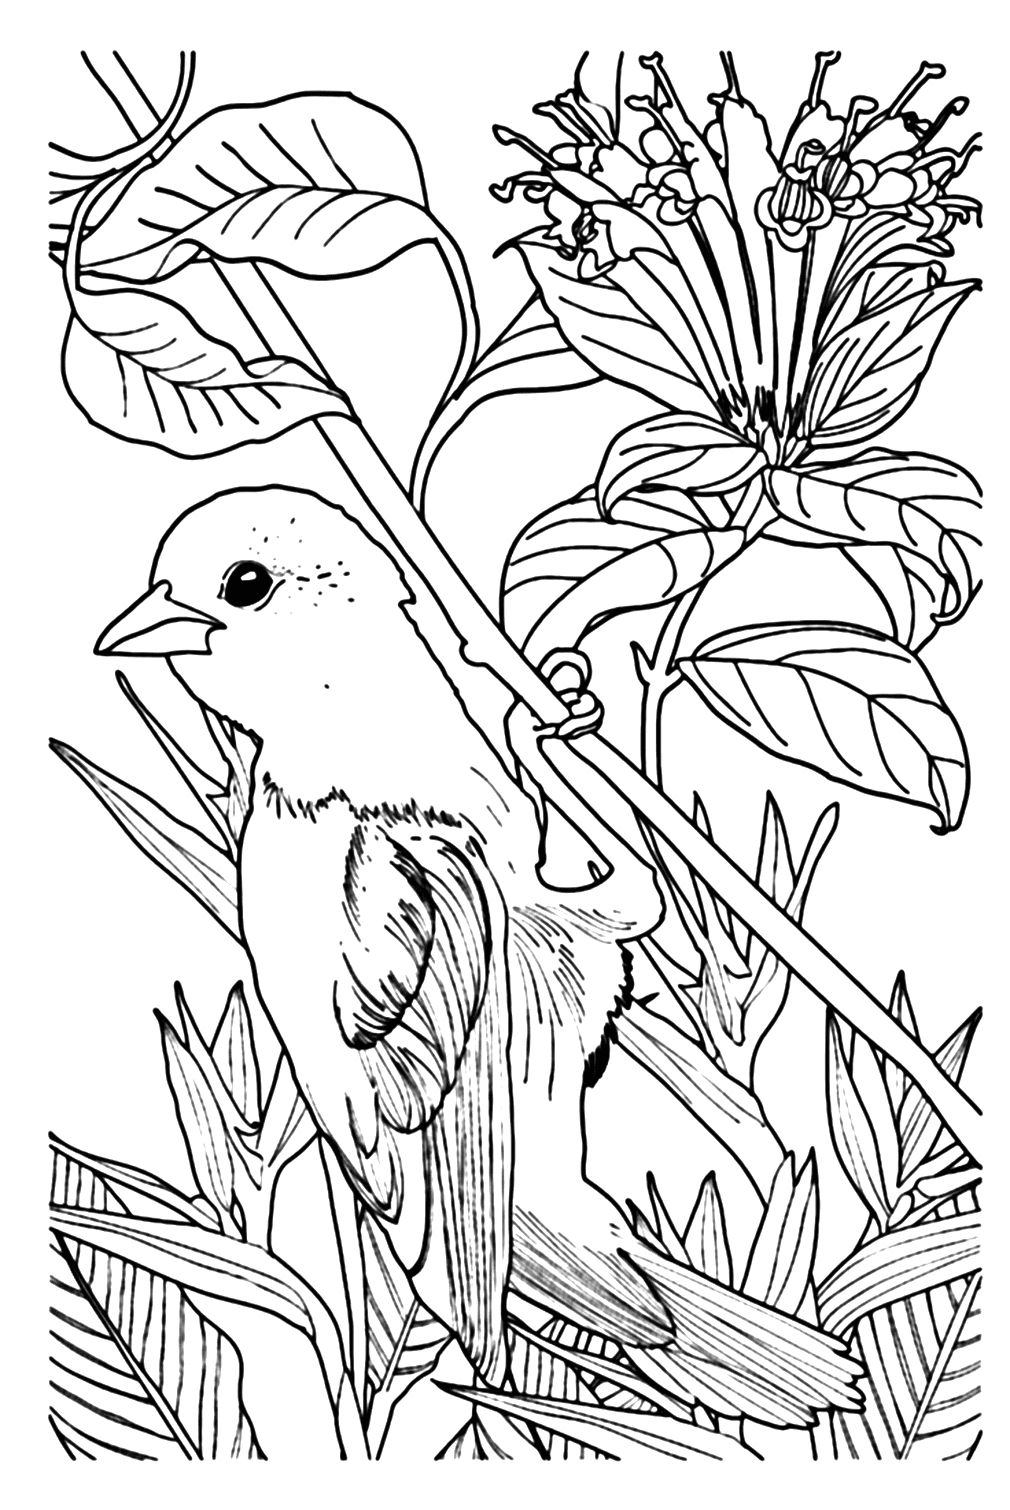 Nightingale image to color